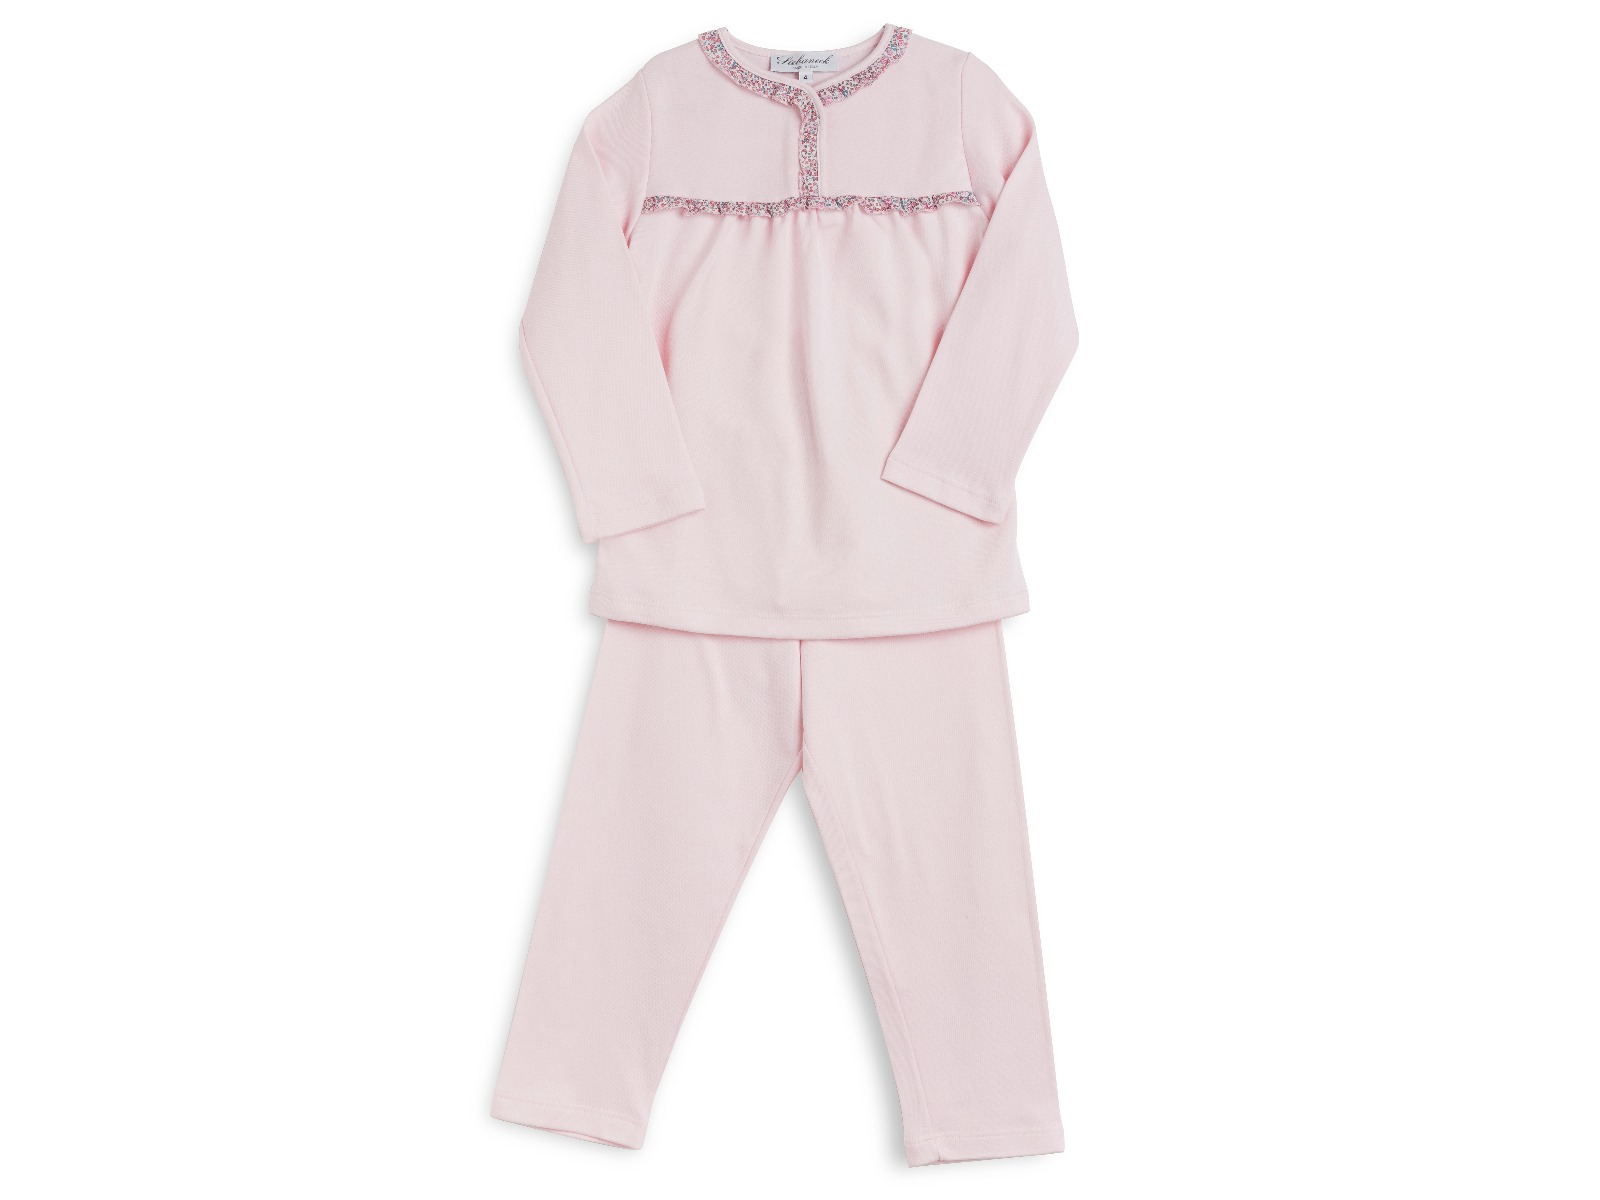 Siebaneck, i pigiami artigianali italiani: - bambina - mod. 101 Bimba rosa /liberty rosa